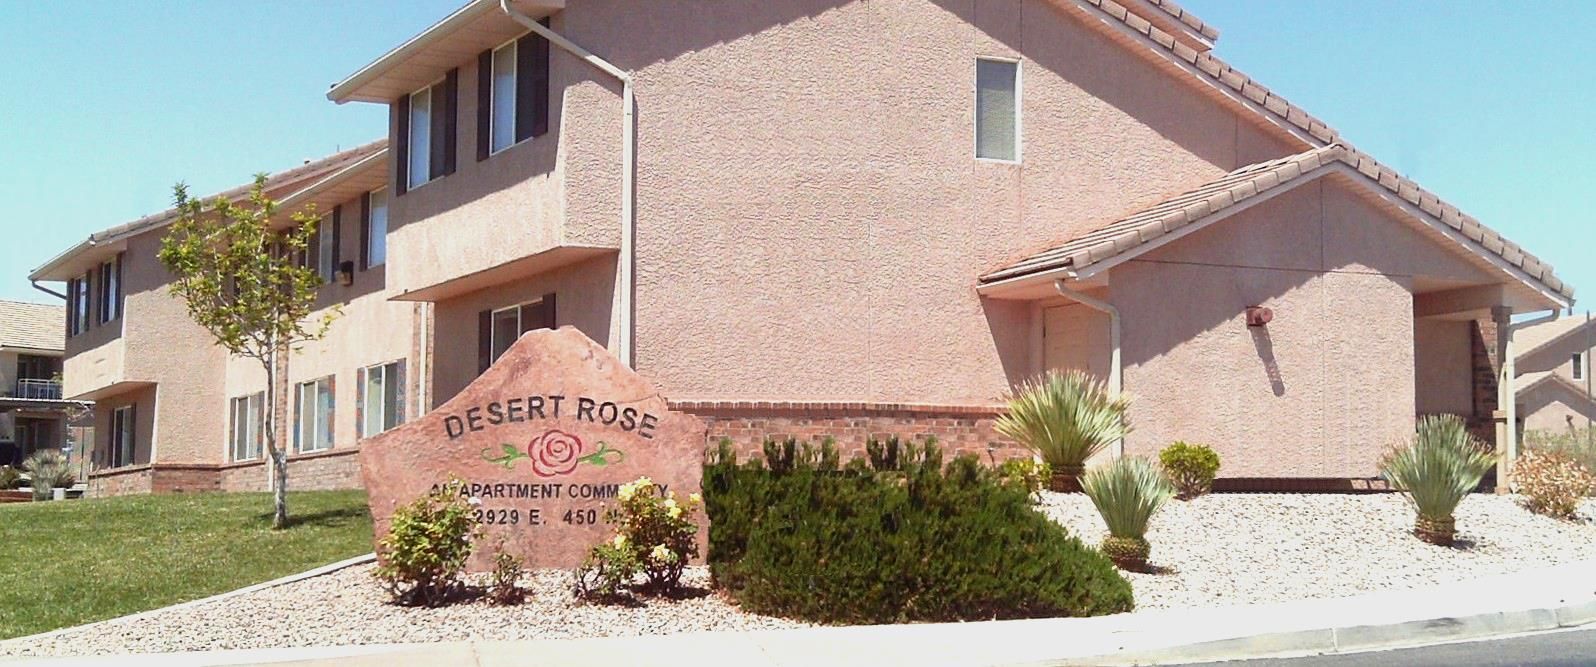 Desert Rose Apartments- St. George, UT